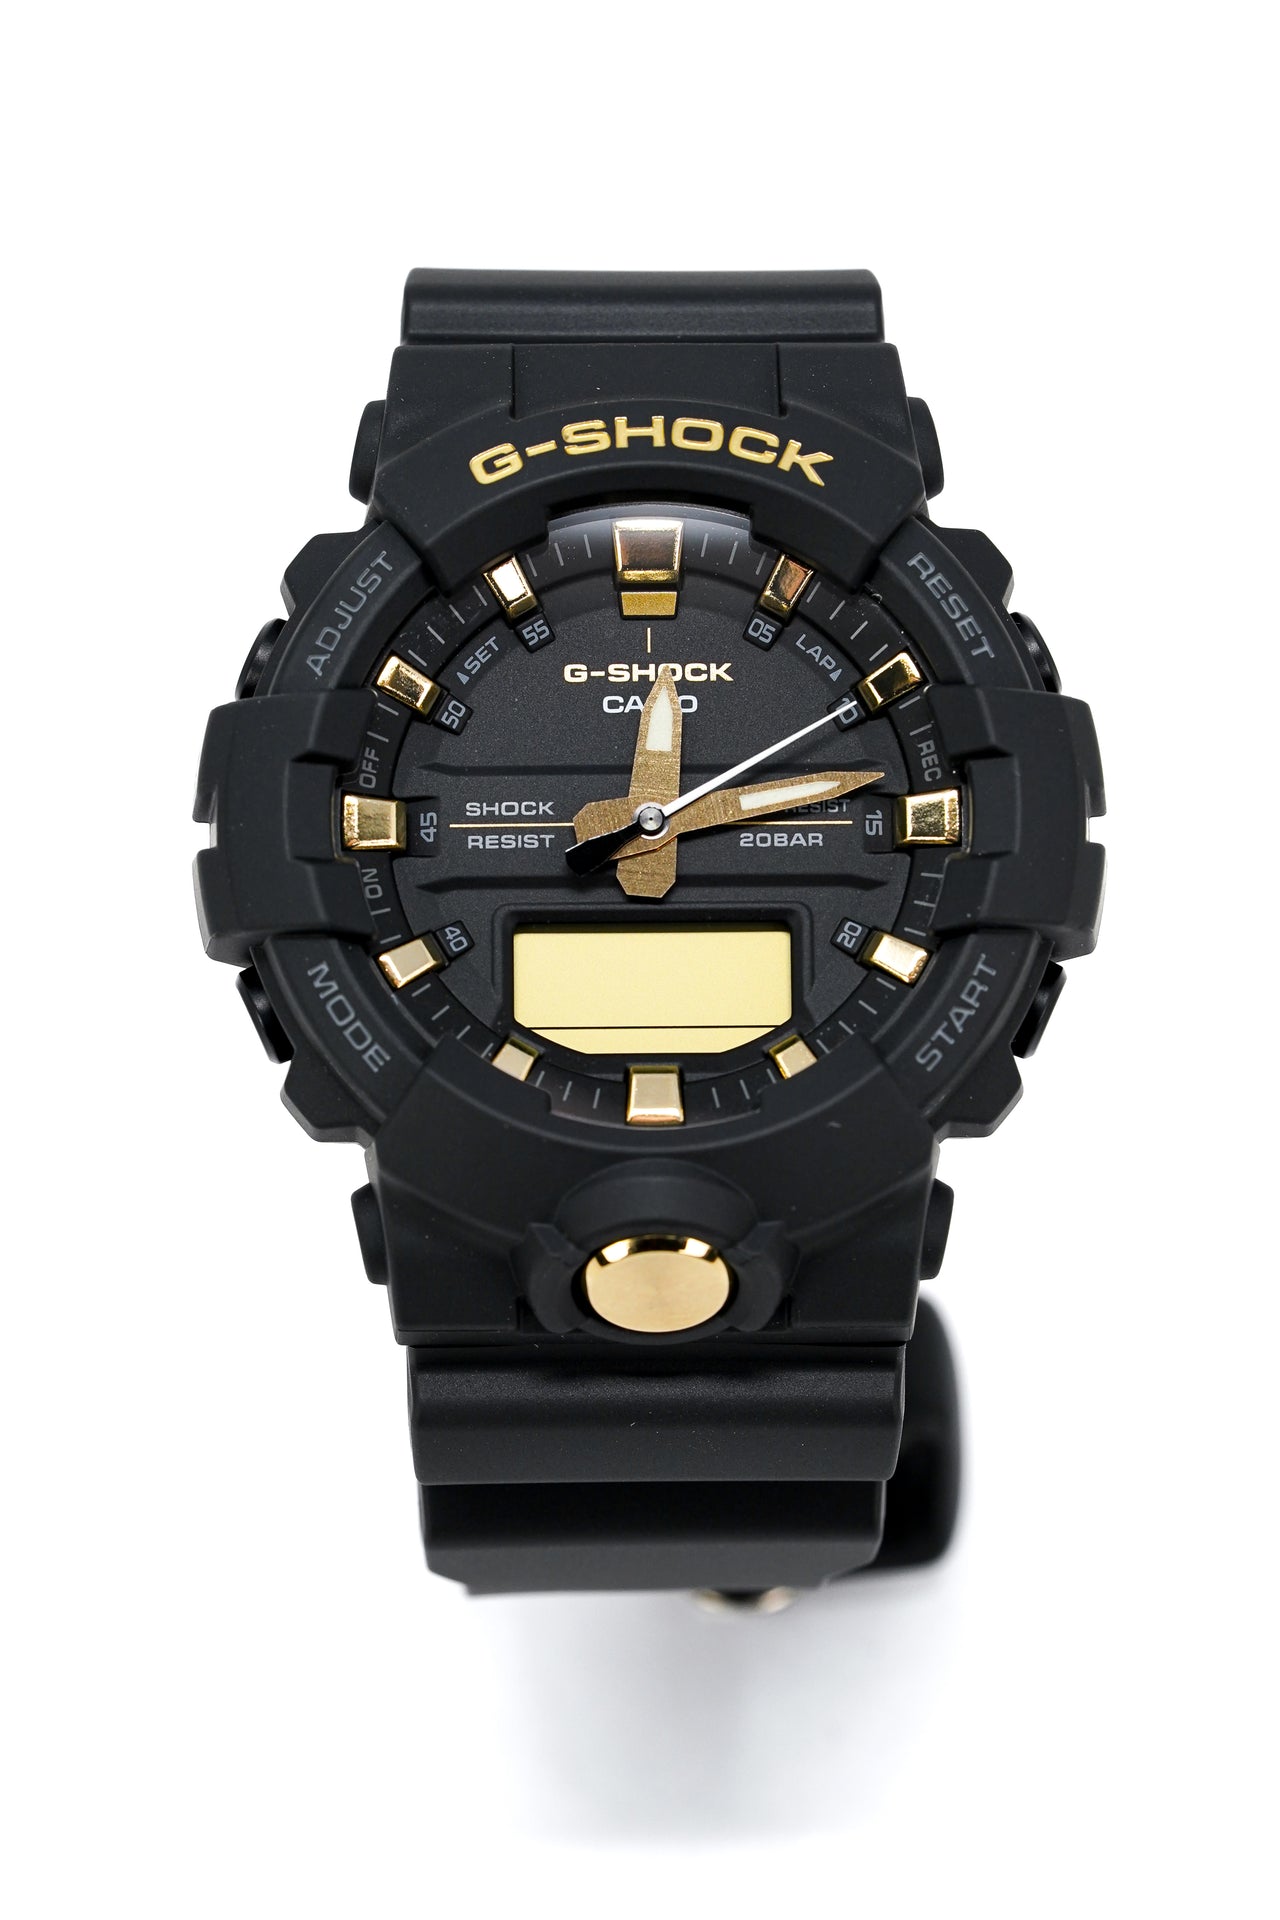 Casio G-Shock Watch Black/Gold GA-810B-1A9DR